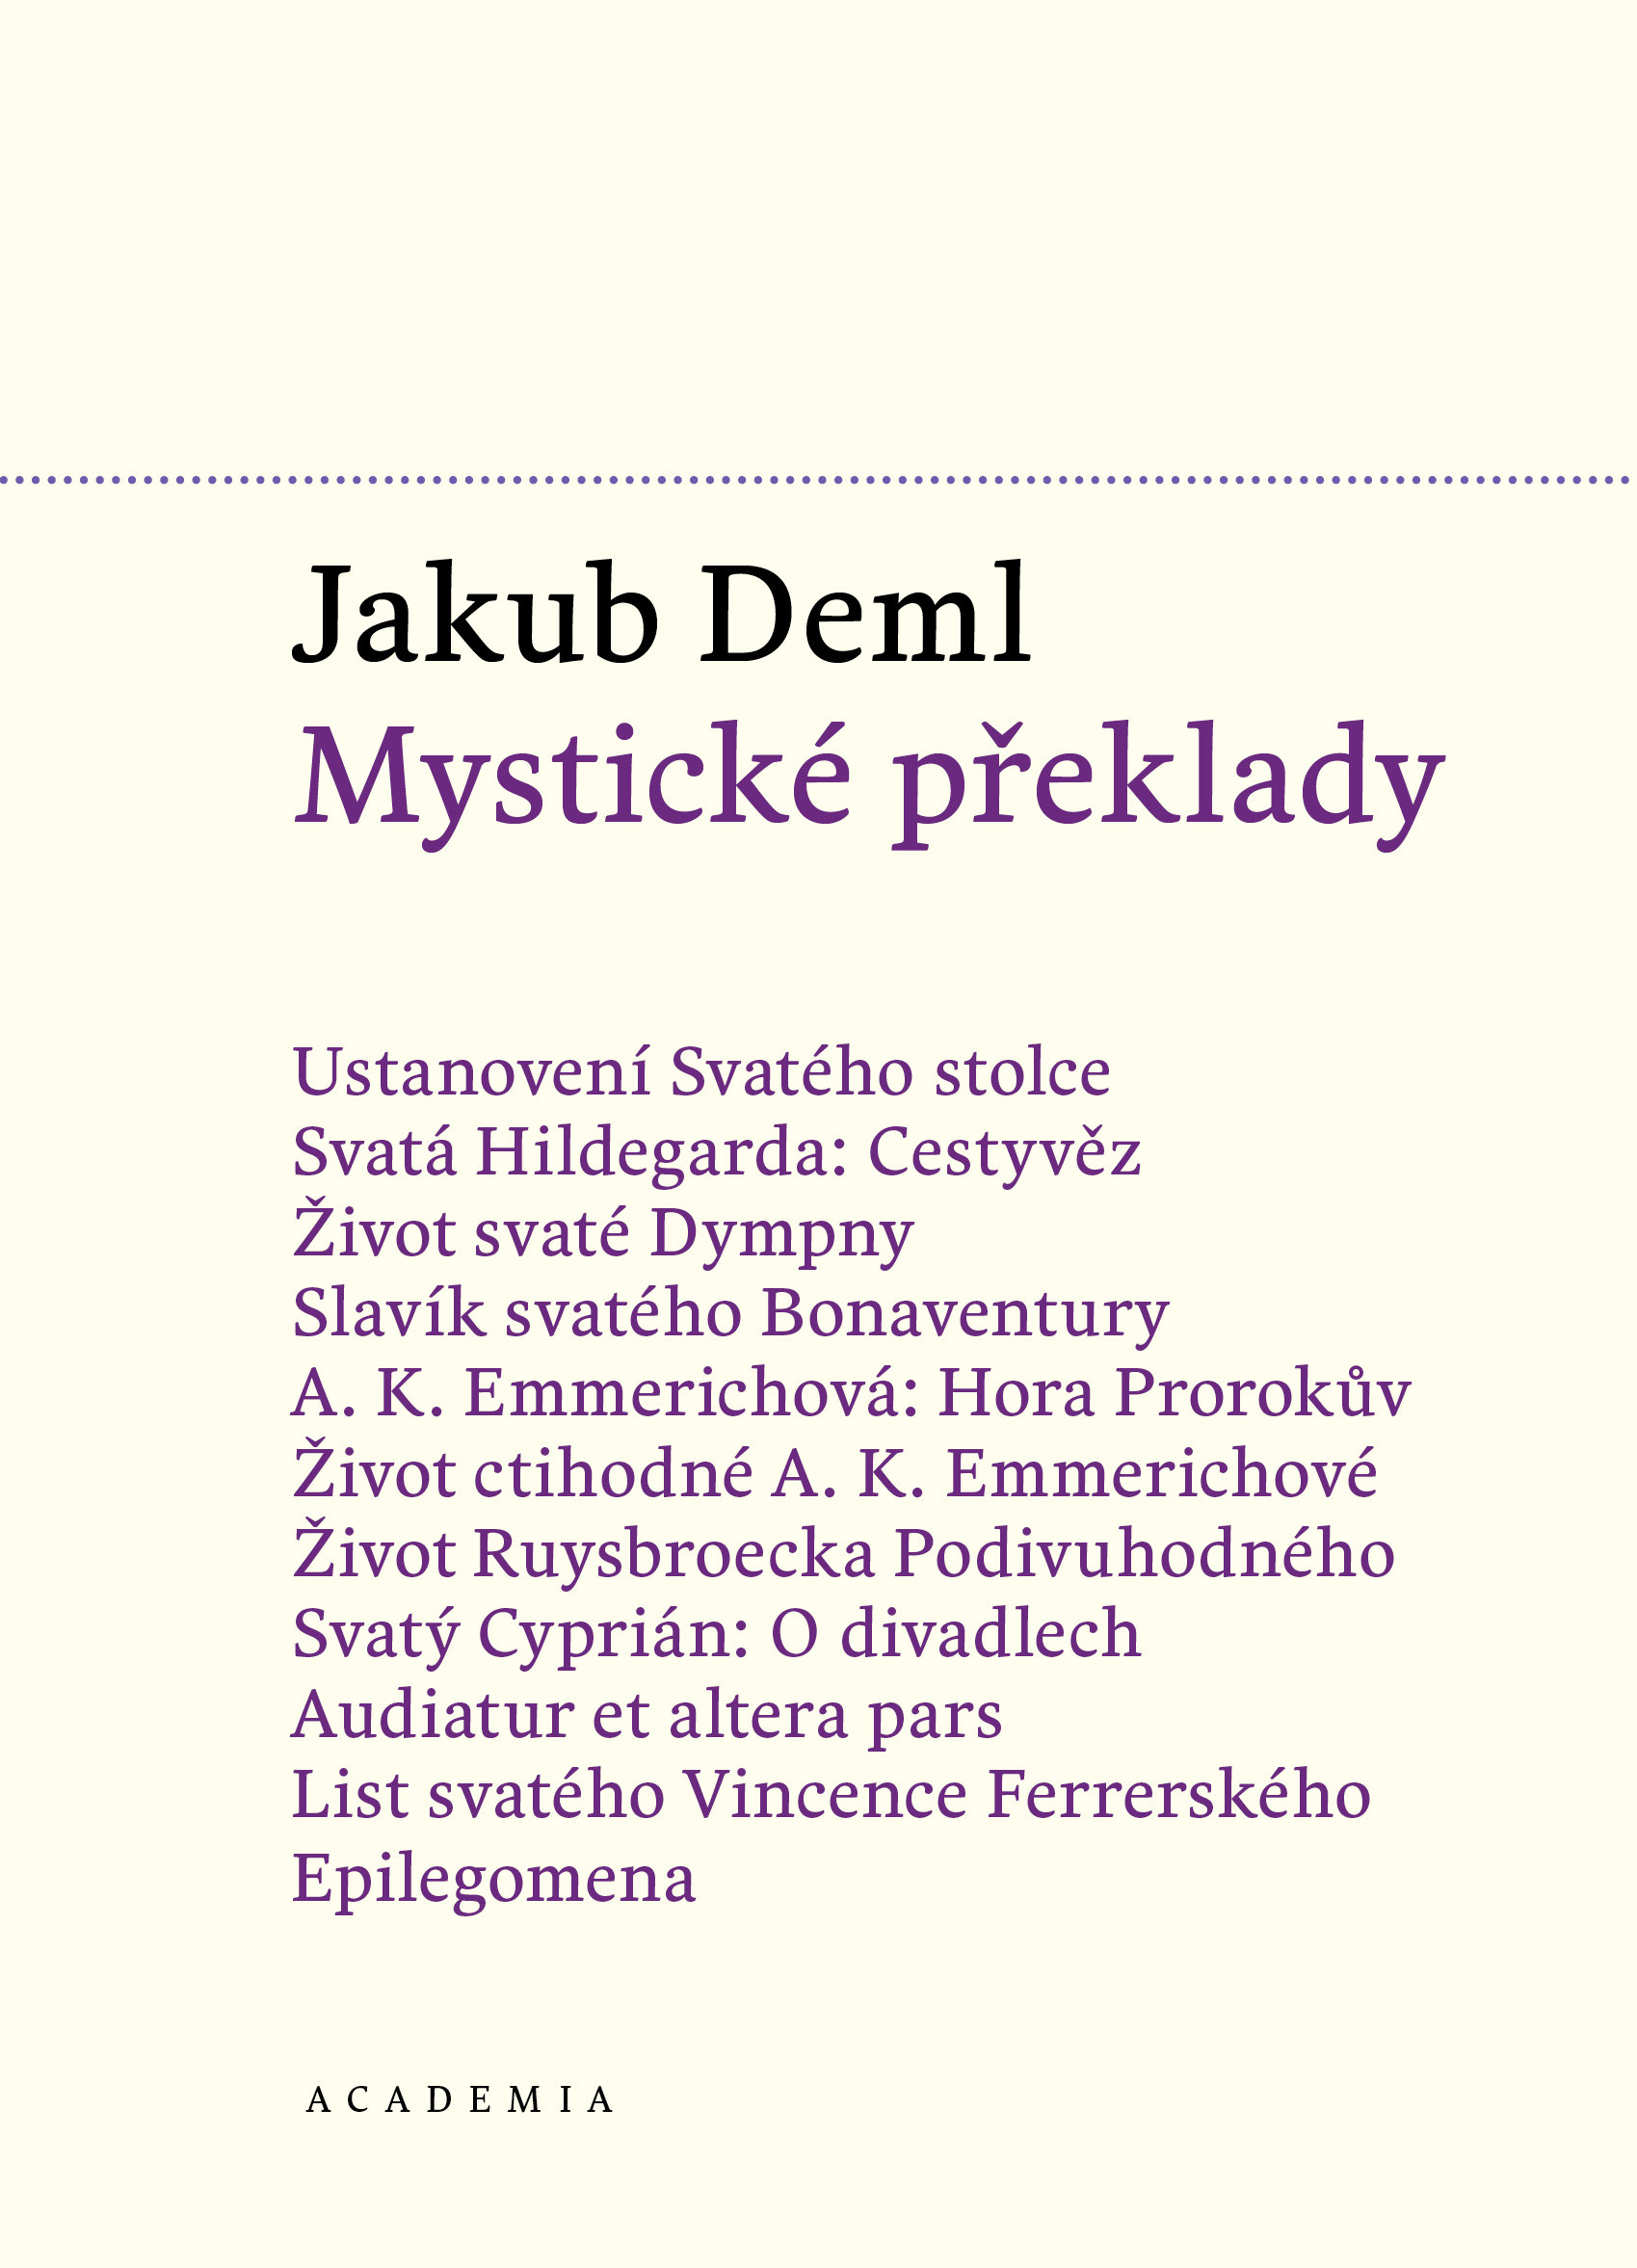 Jakub Deml: Mystické překlady (792 stran, Academia, Praha 2014)